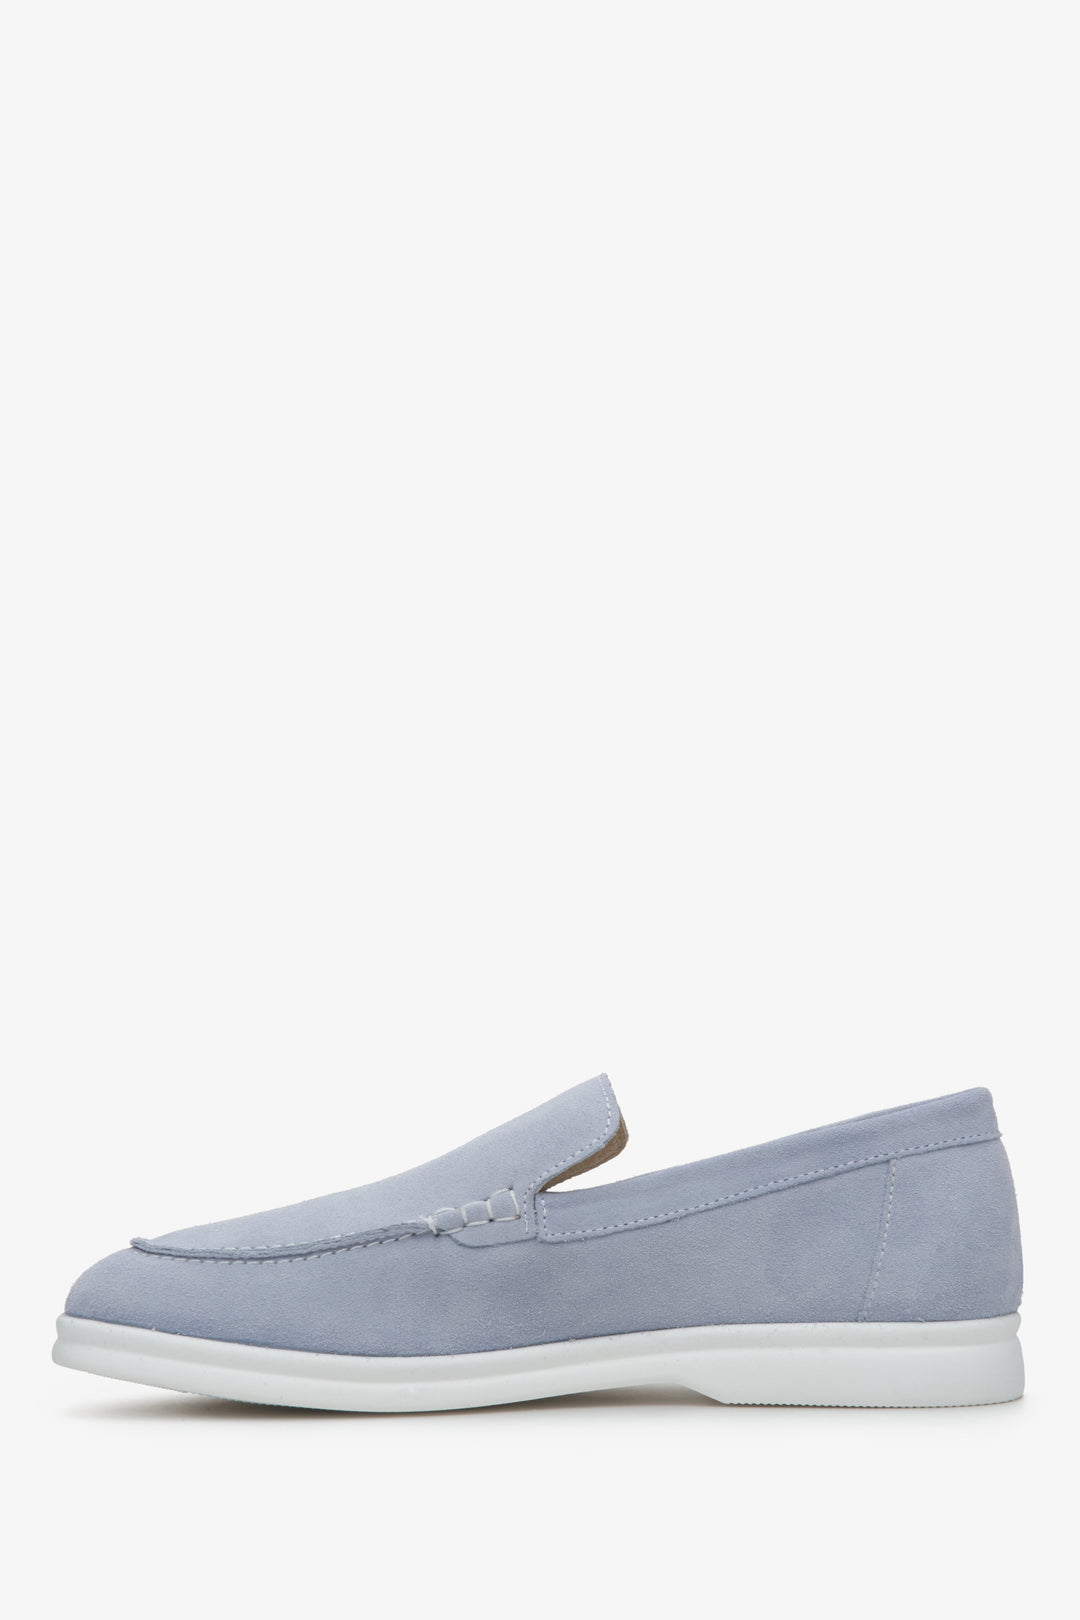 Estro light blue suede loafers for women - shoe profile.